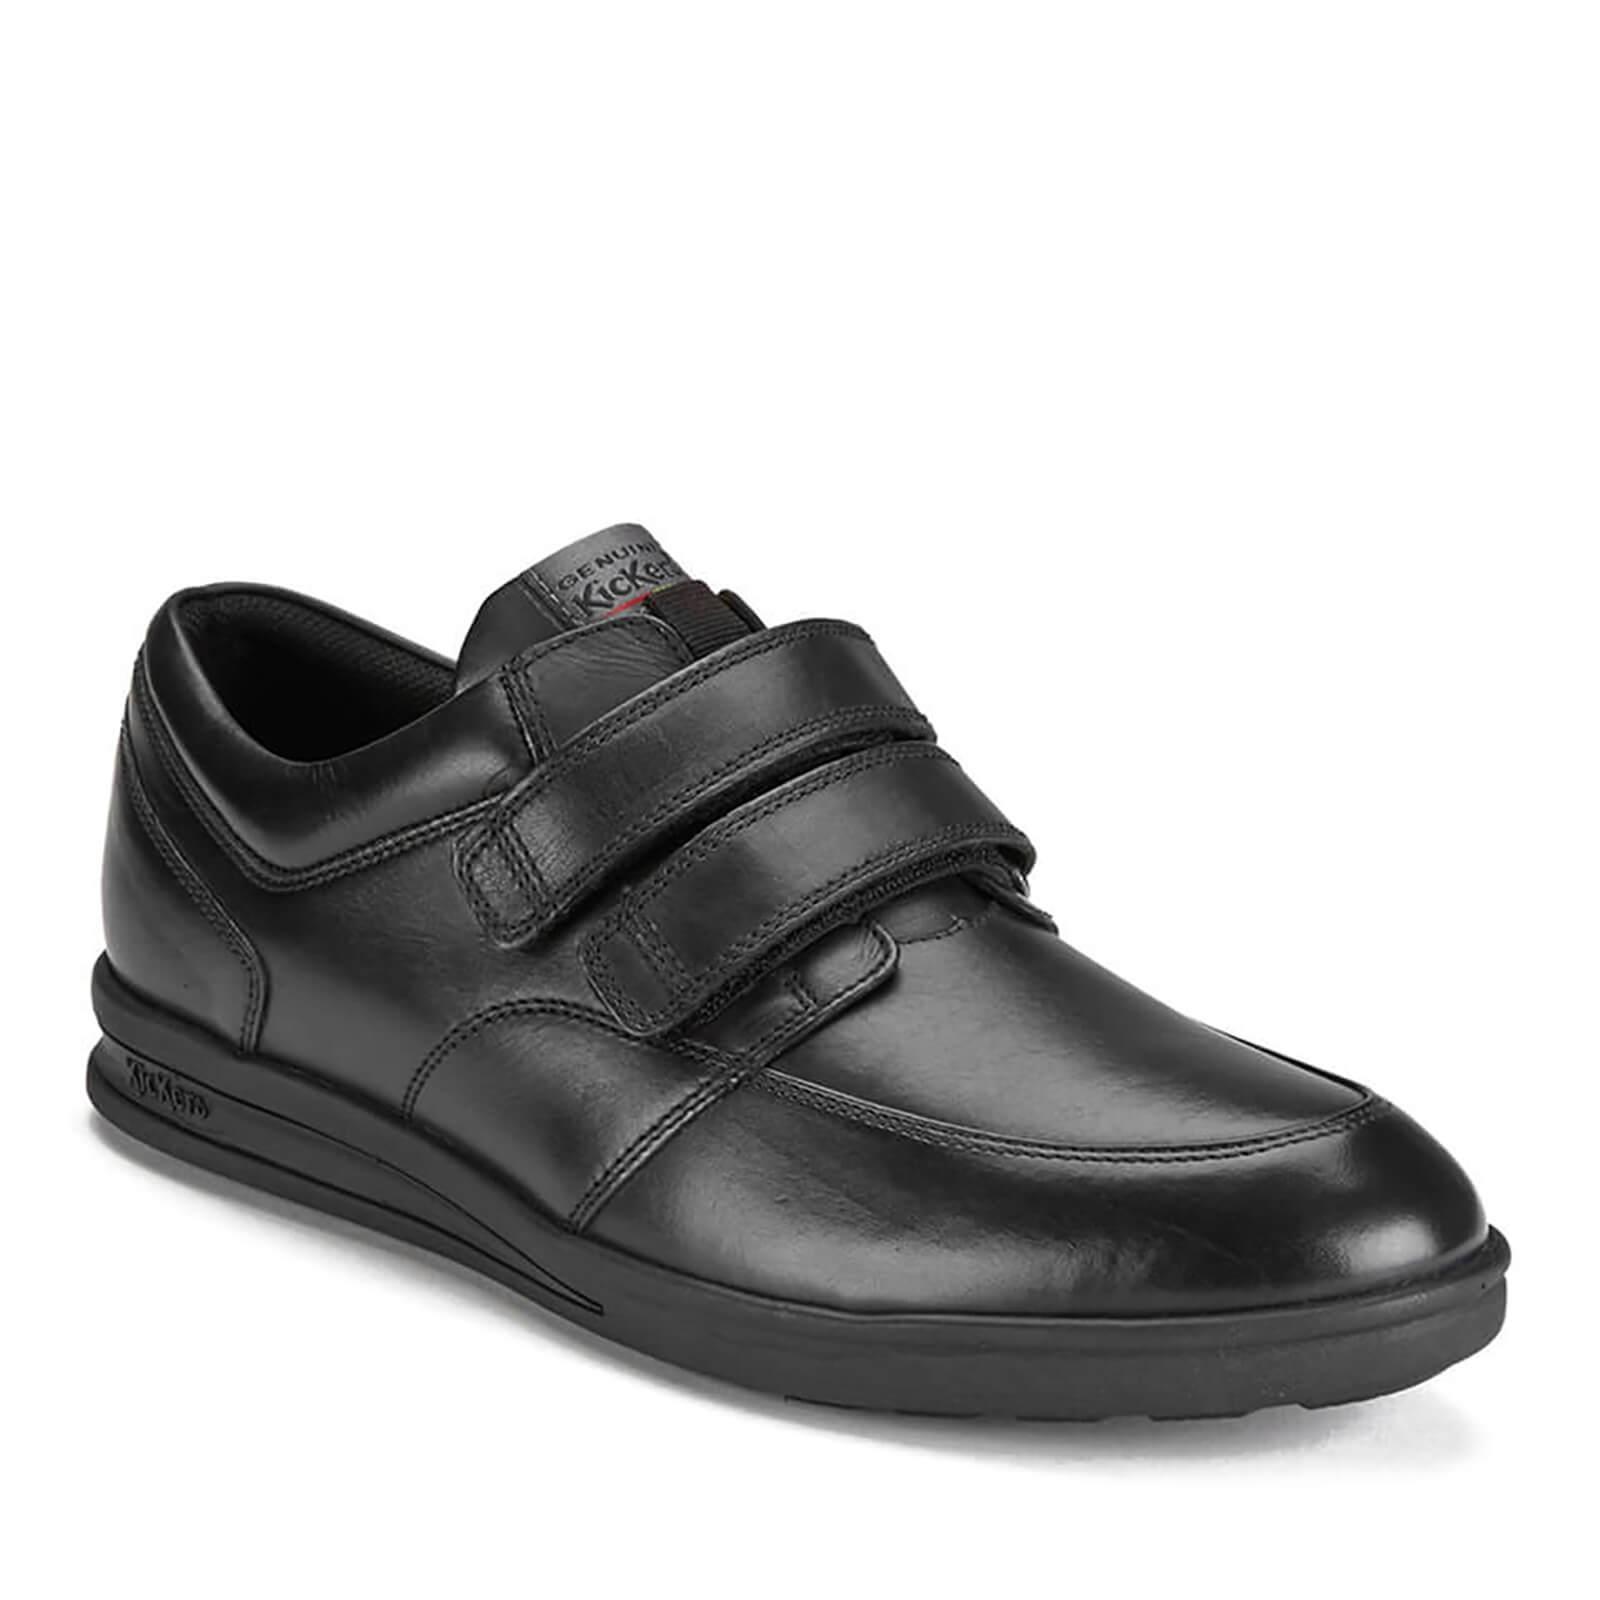 NEW KICKERS TROIKO MEN'S BLACK LEATHER SLIP SHOES SMART CASUAL Shoes